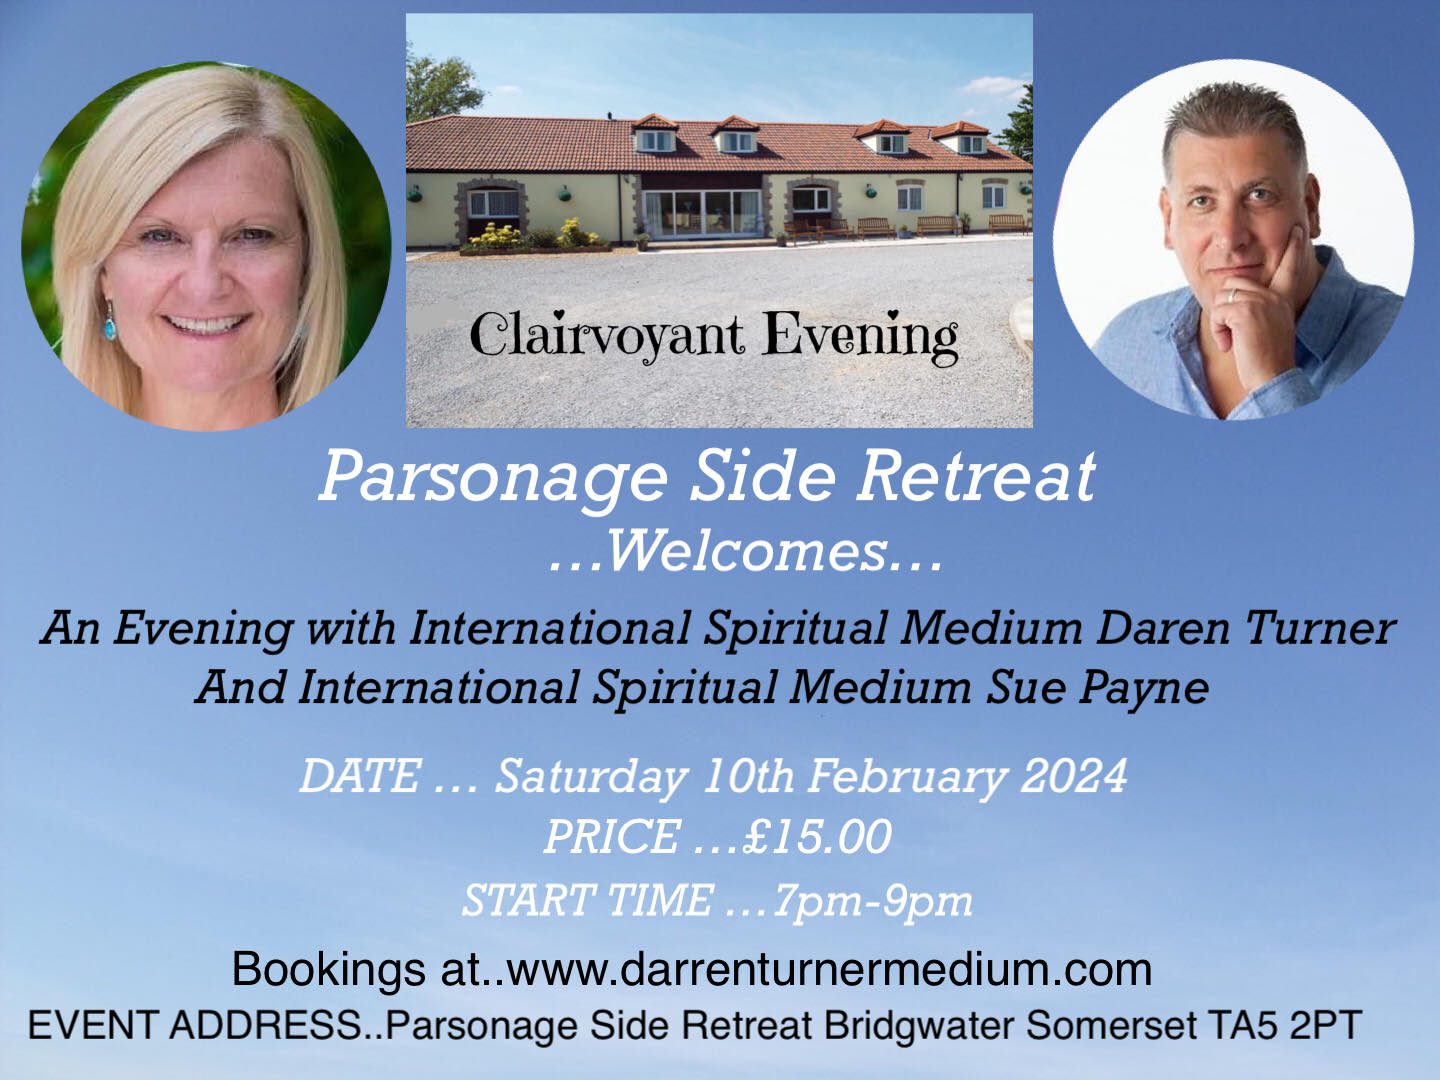 10th February - Parsonage Side Retreat